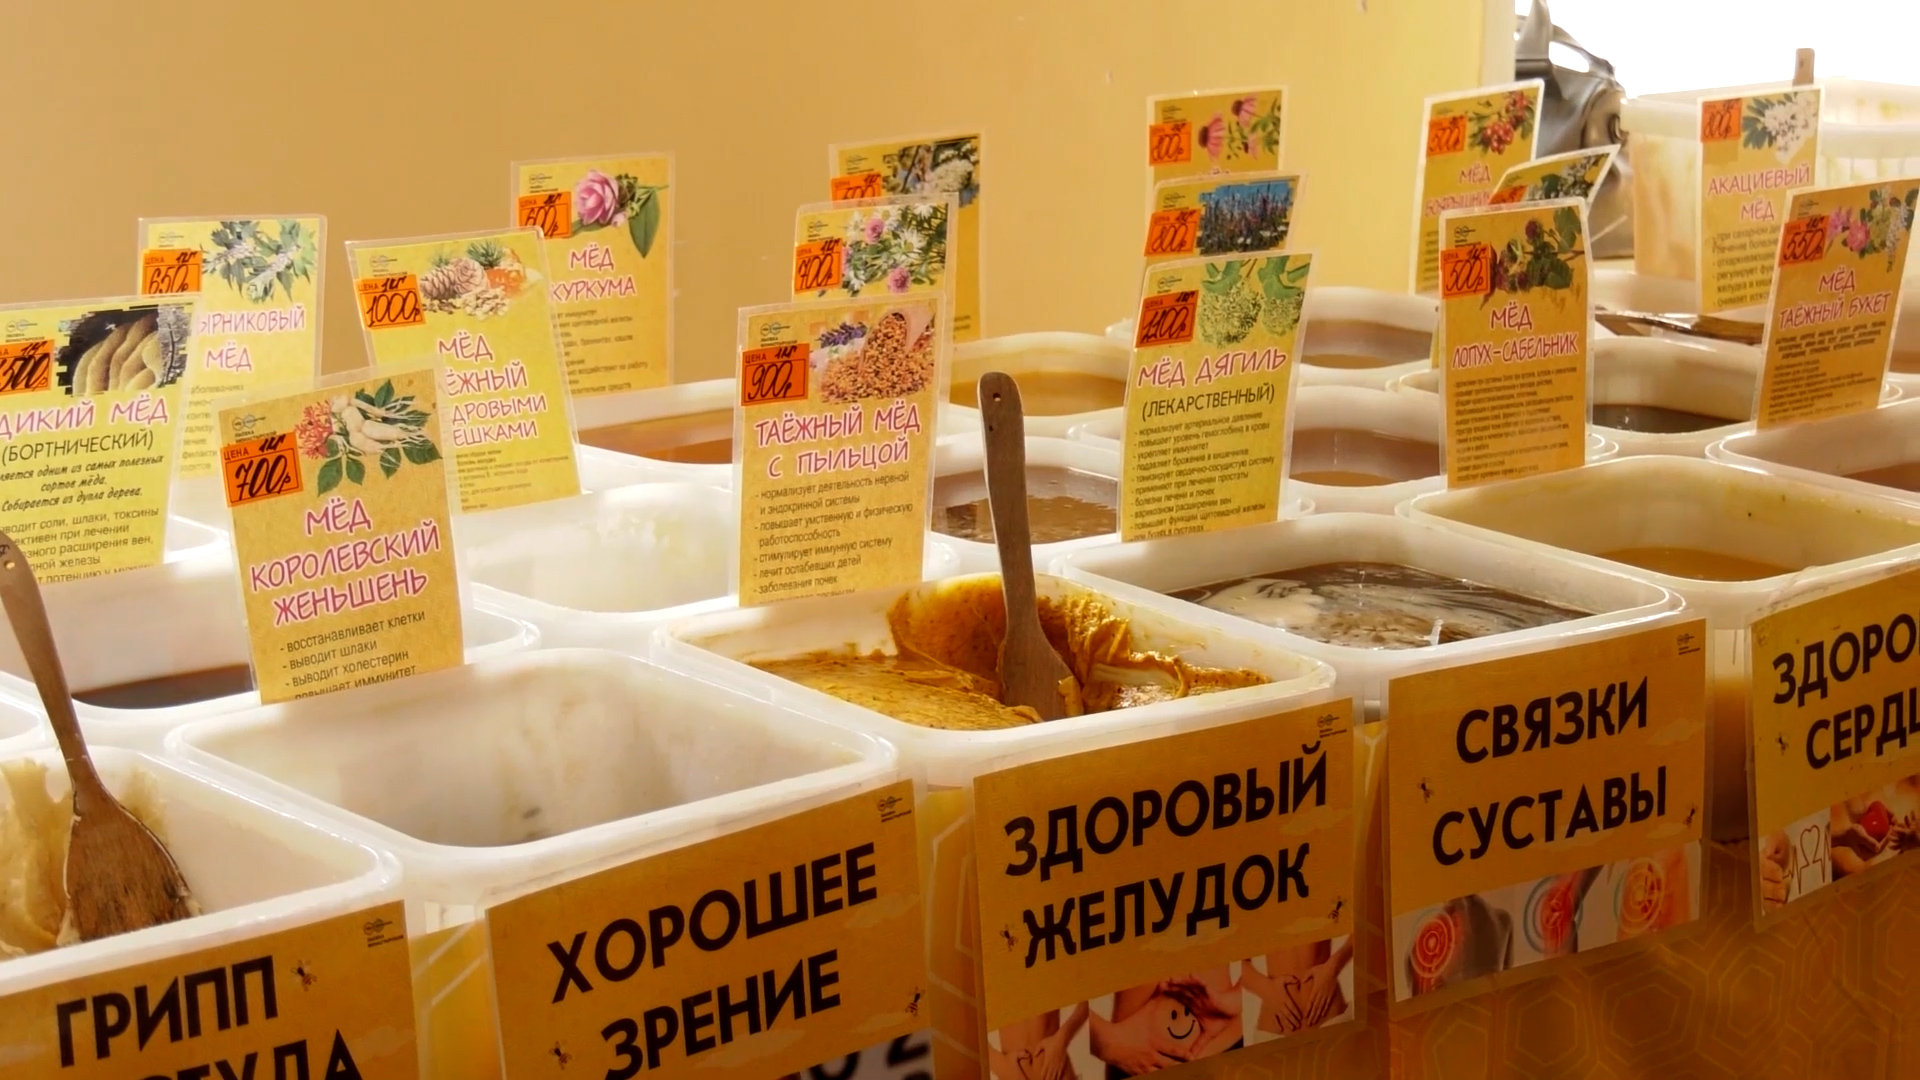 Ярмарка мёда и конфитюра во Дворце культуры до 28 марта